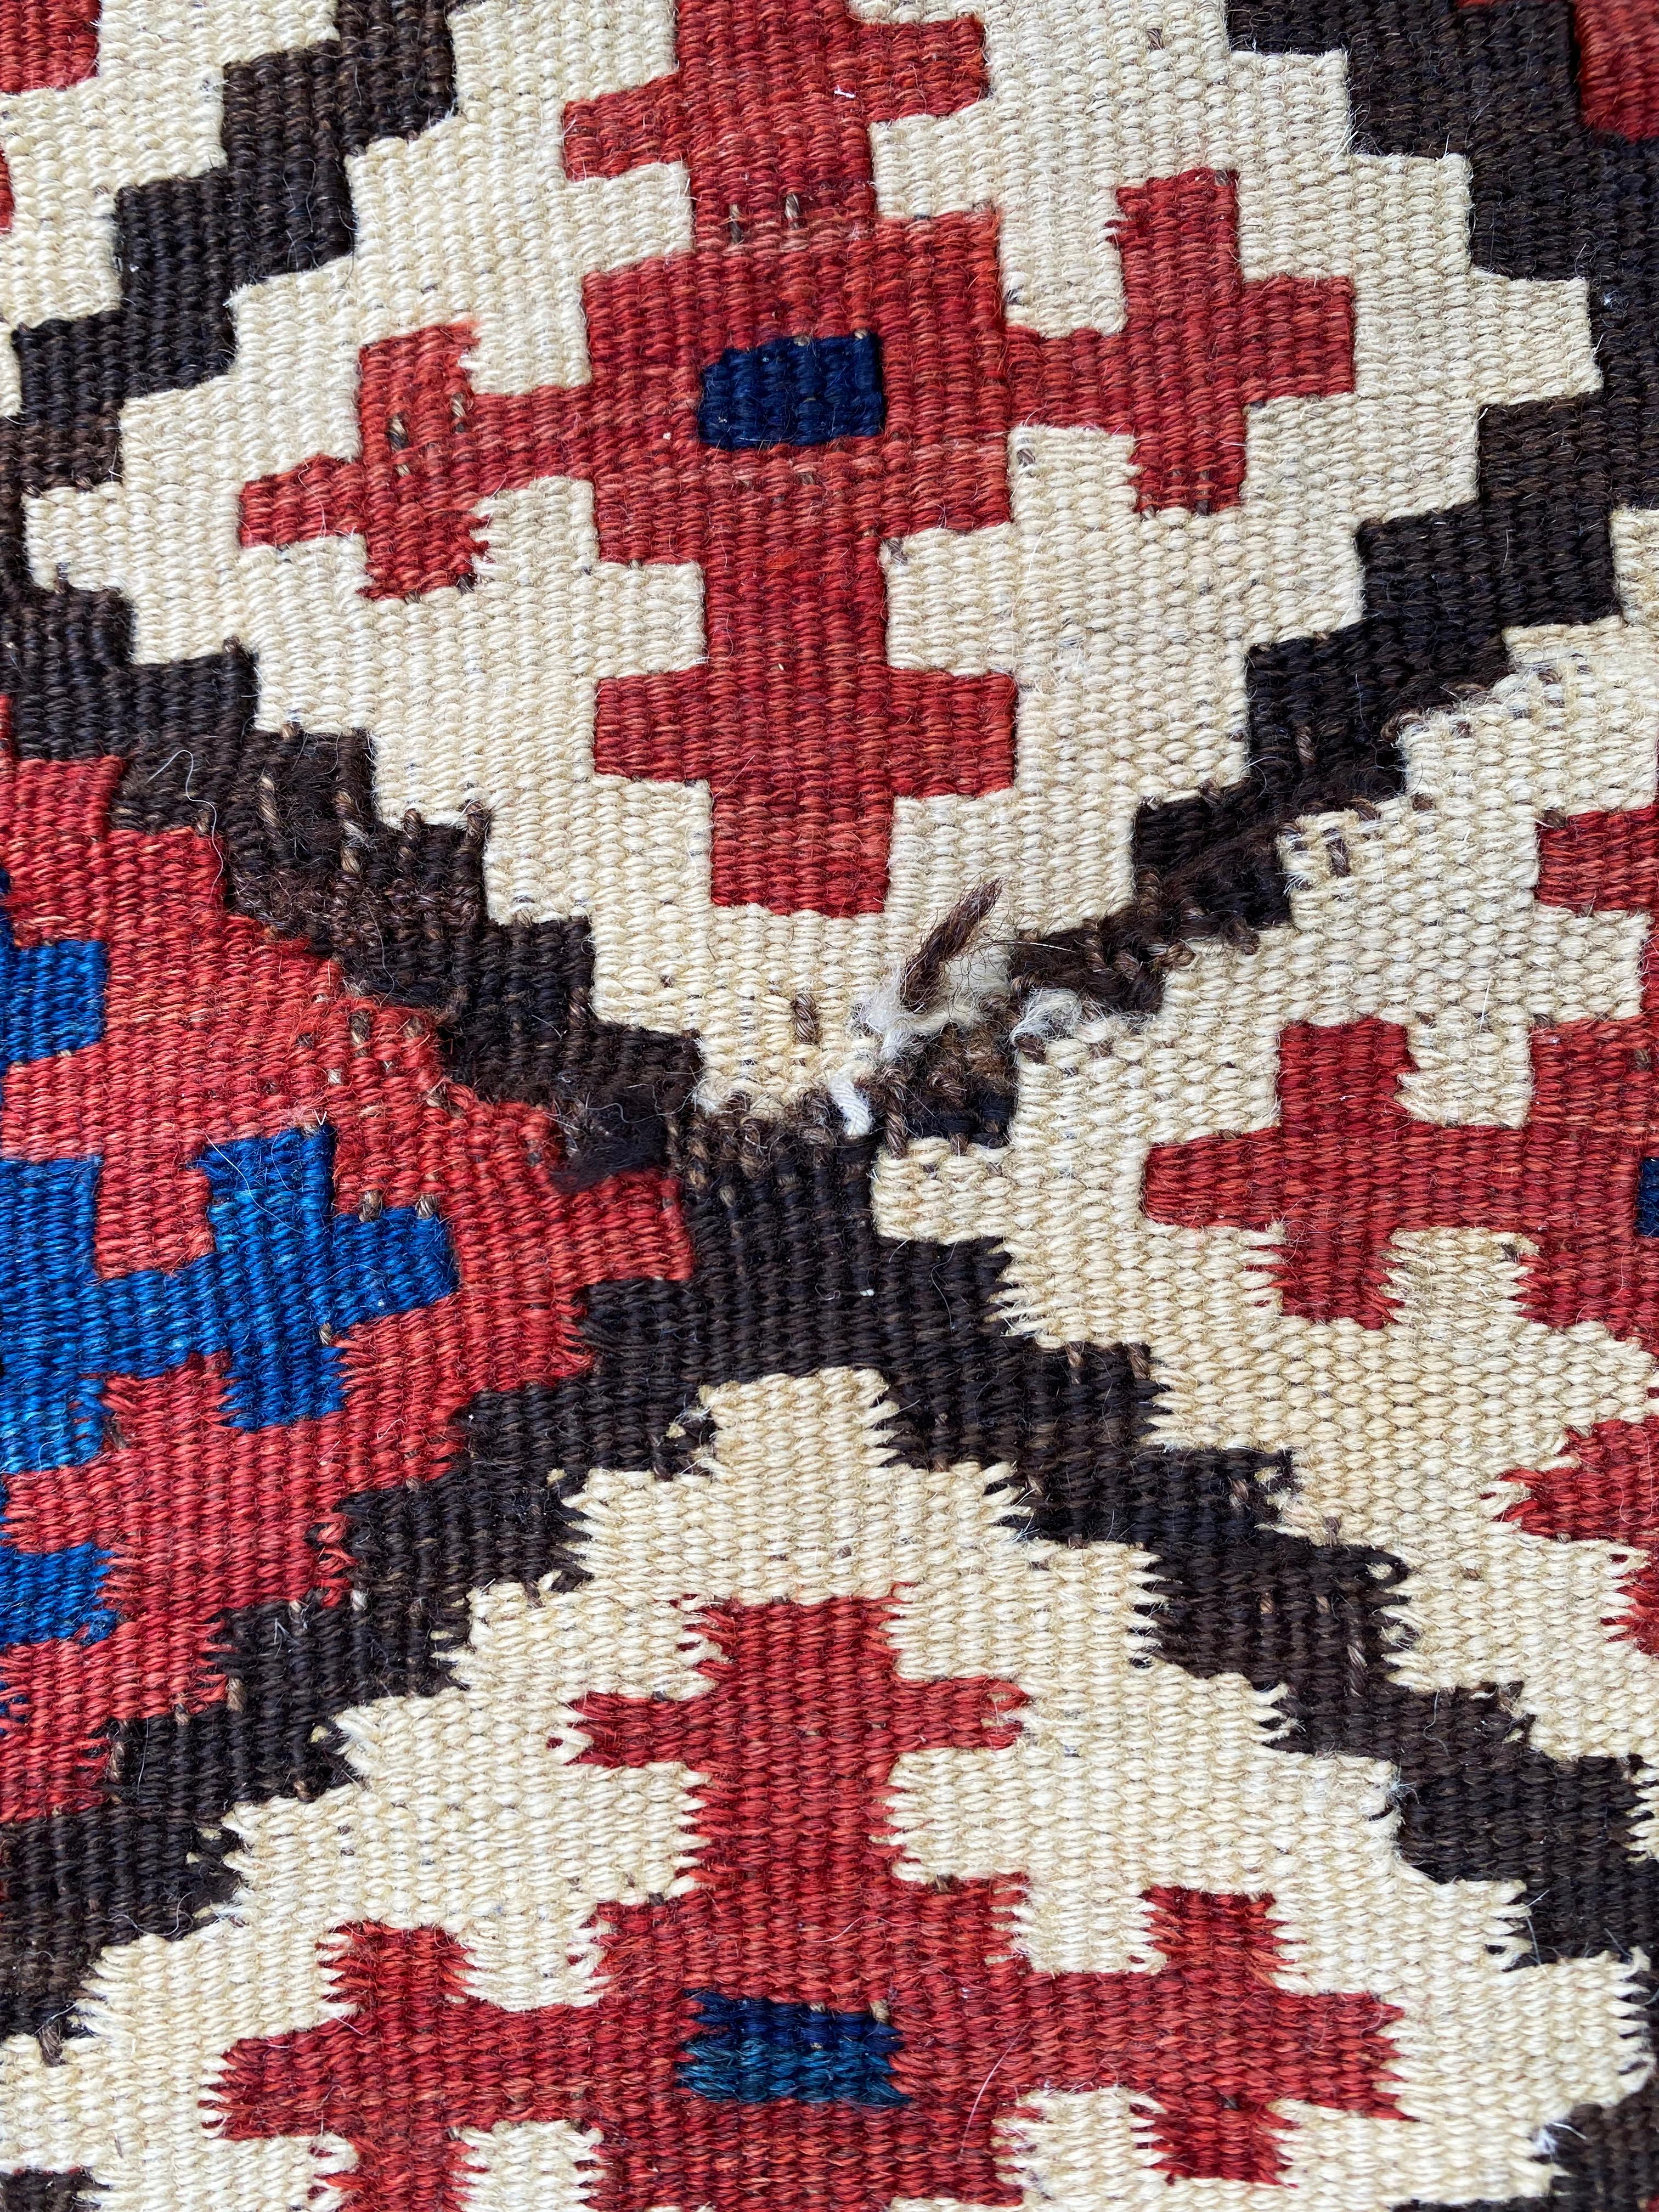 Uzbekistan Tartari Ranghi Kilim Rug from Wool, Early 20th Century For Sale 3